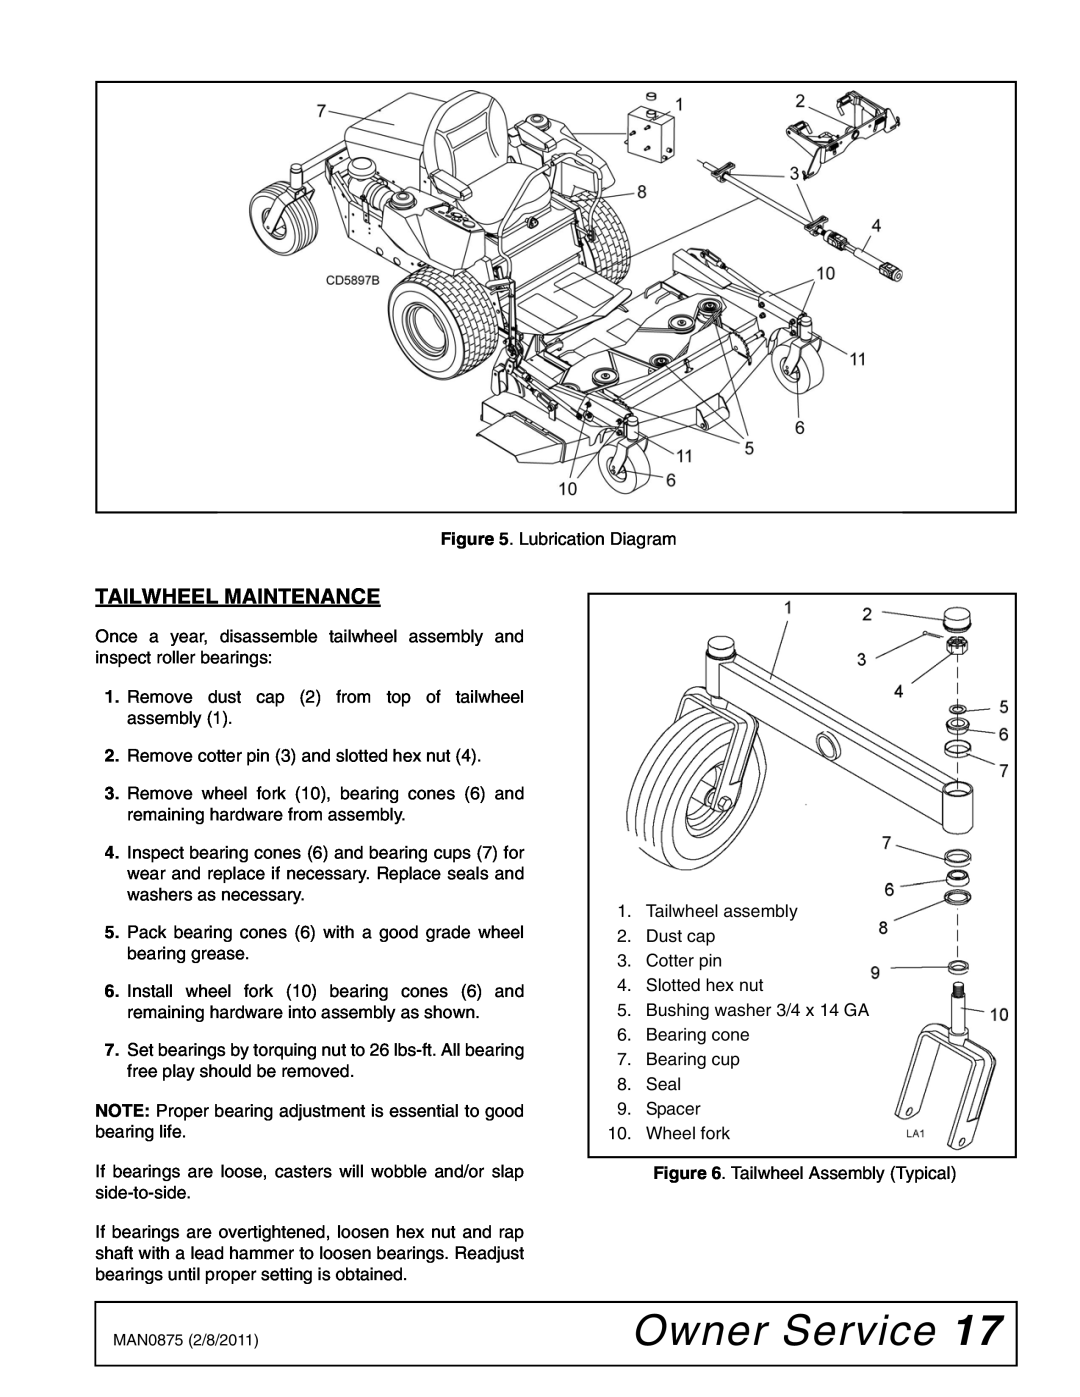 Woods Equipment FZ23B, FZ28K manual Owner Service, Tailwheel Maintenance 